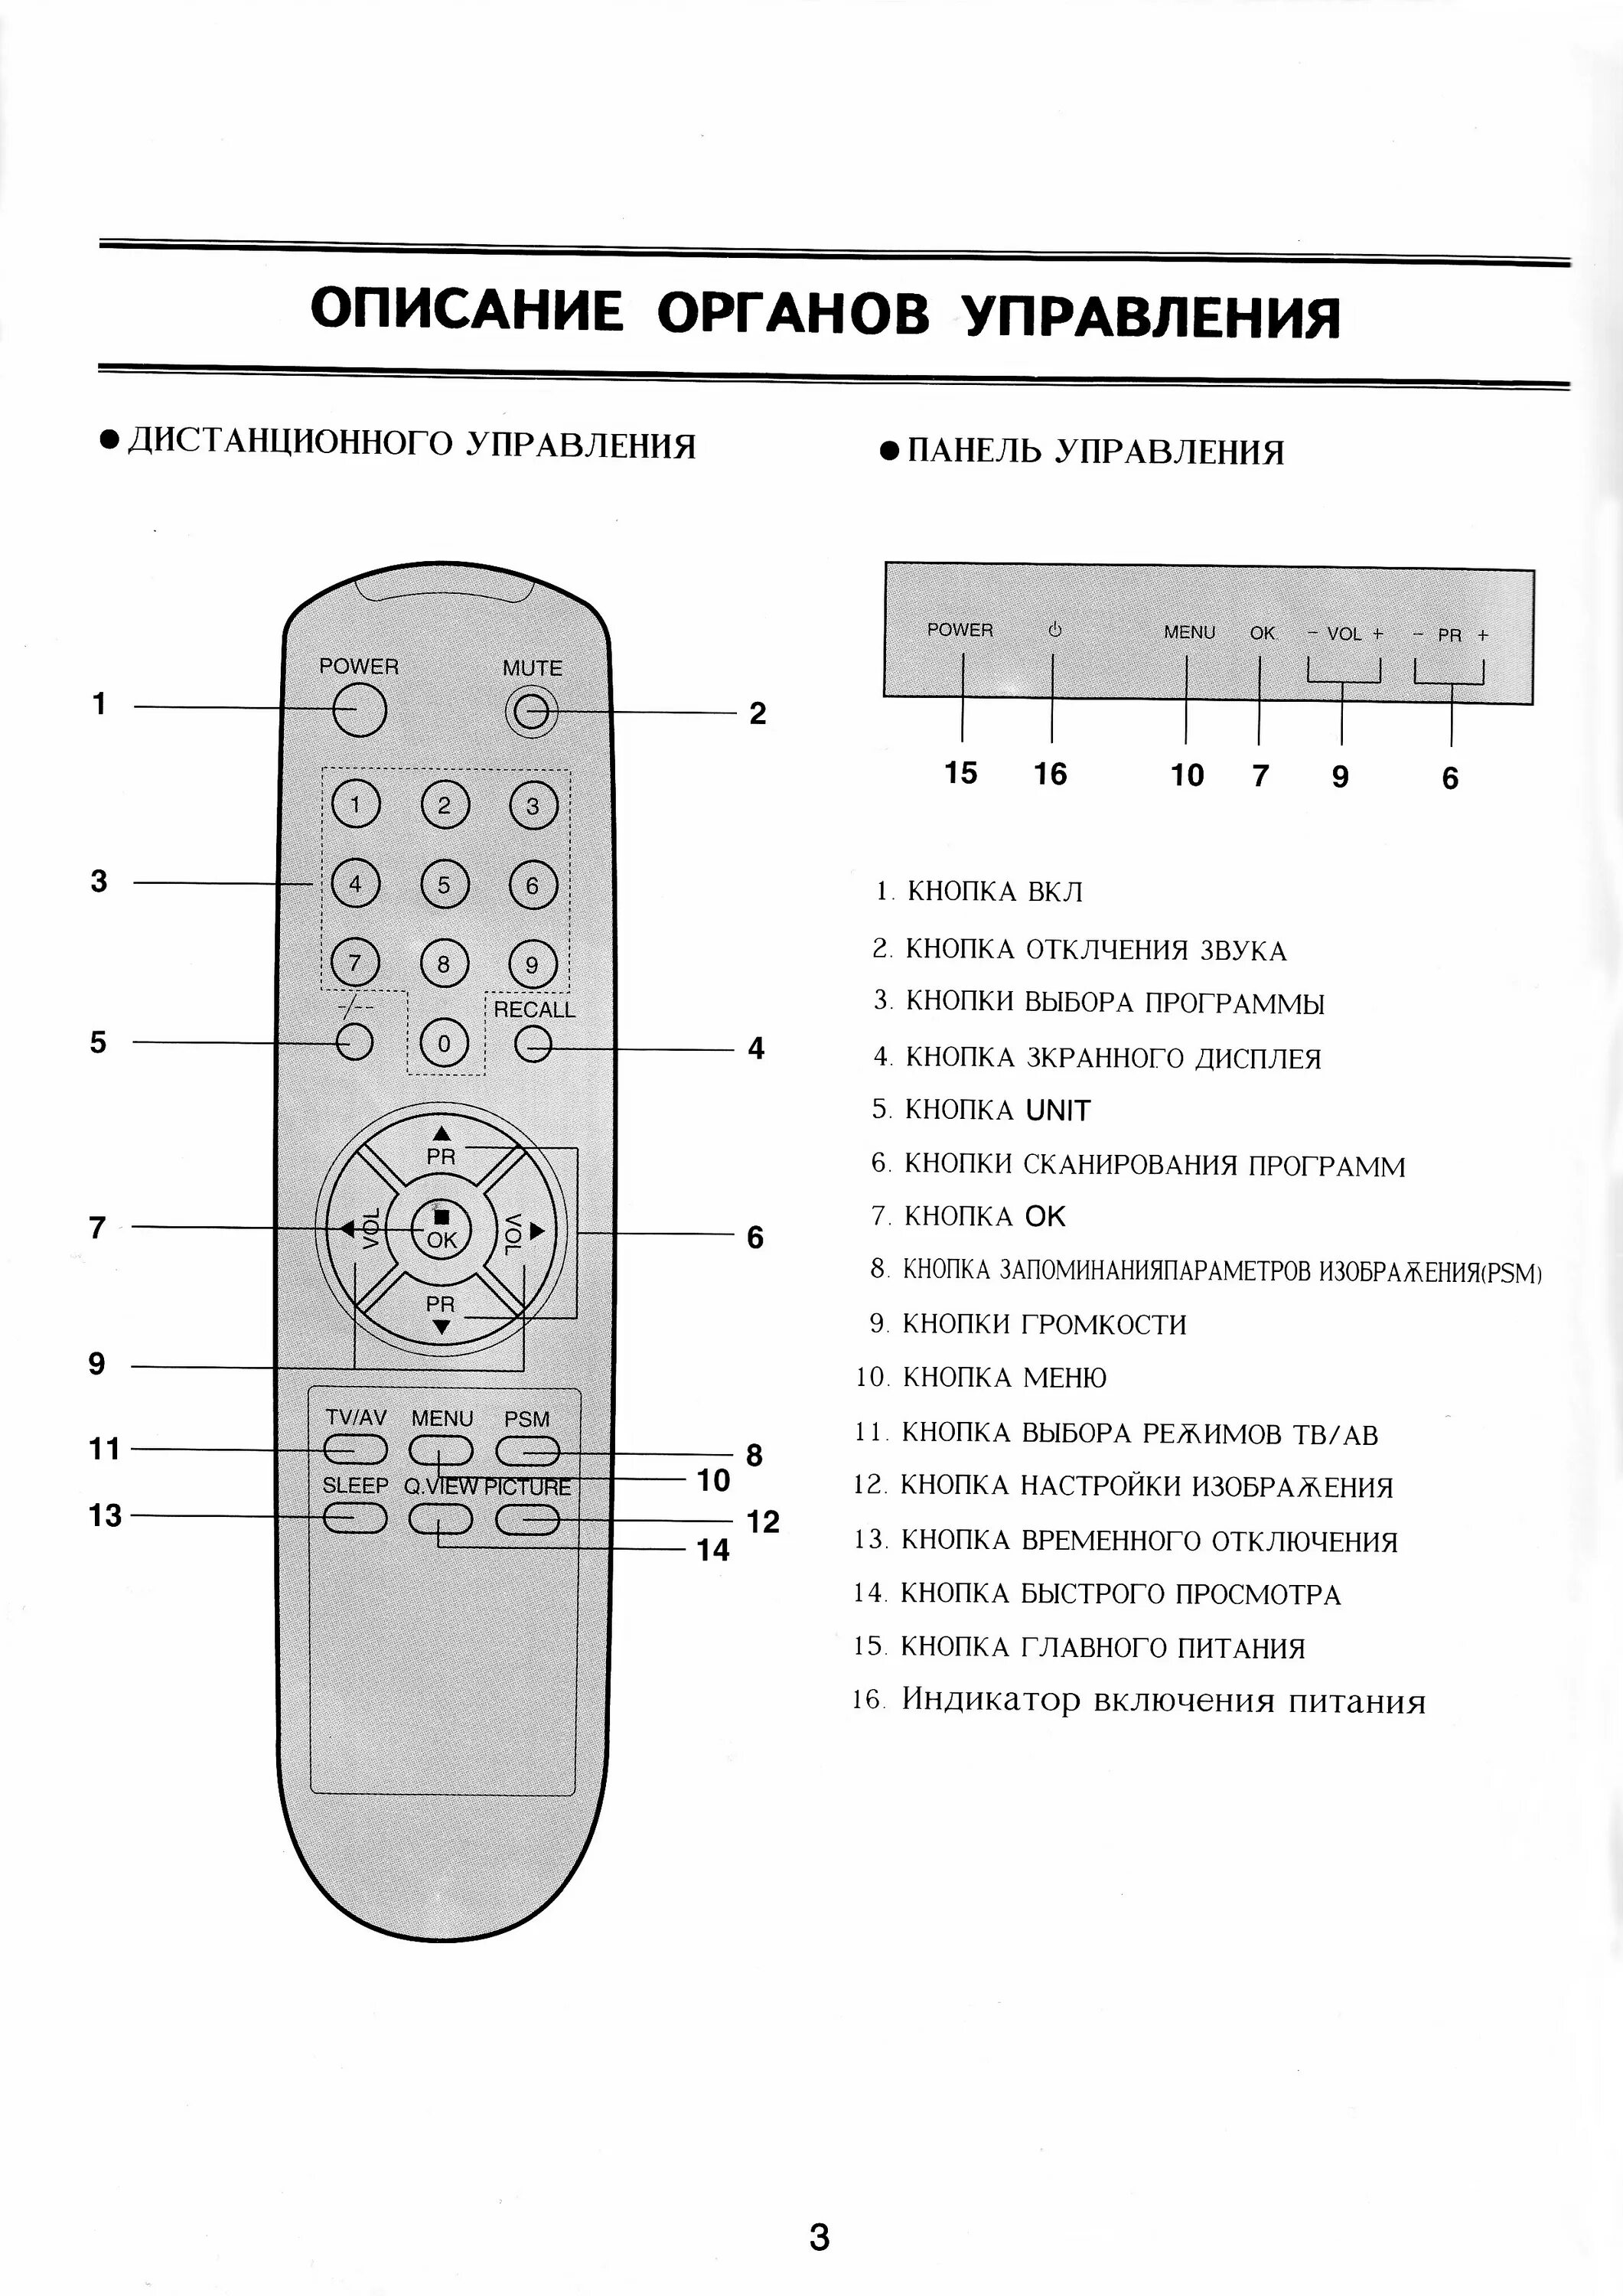 Как переключать каналы на телевизоре без пульта. CF-21d33e LG телевизор. GOLDSTAR 23 System пульт. GOLDSTAR CF-20d10b кнопки на передней панели. Телевизор GOLDSTAR 23 System меню.